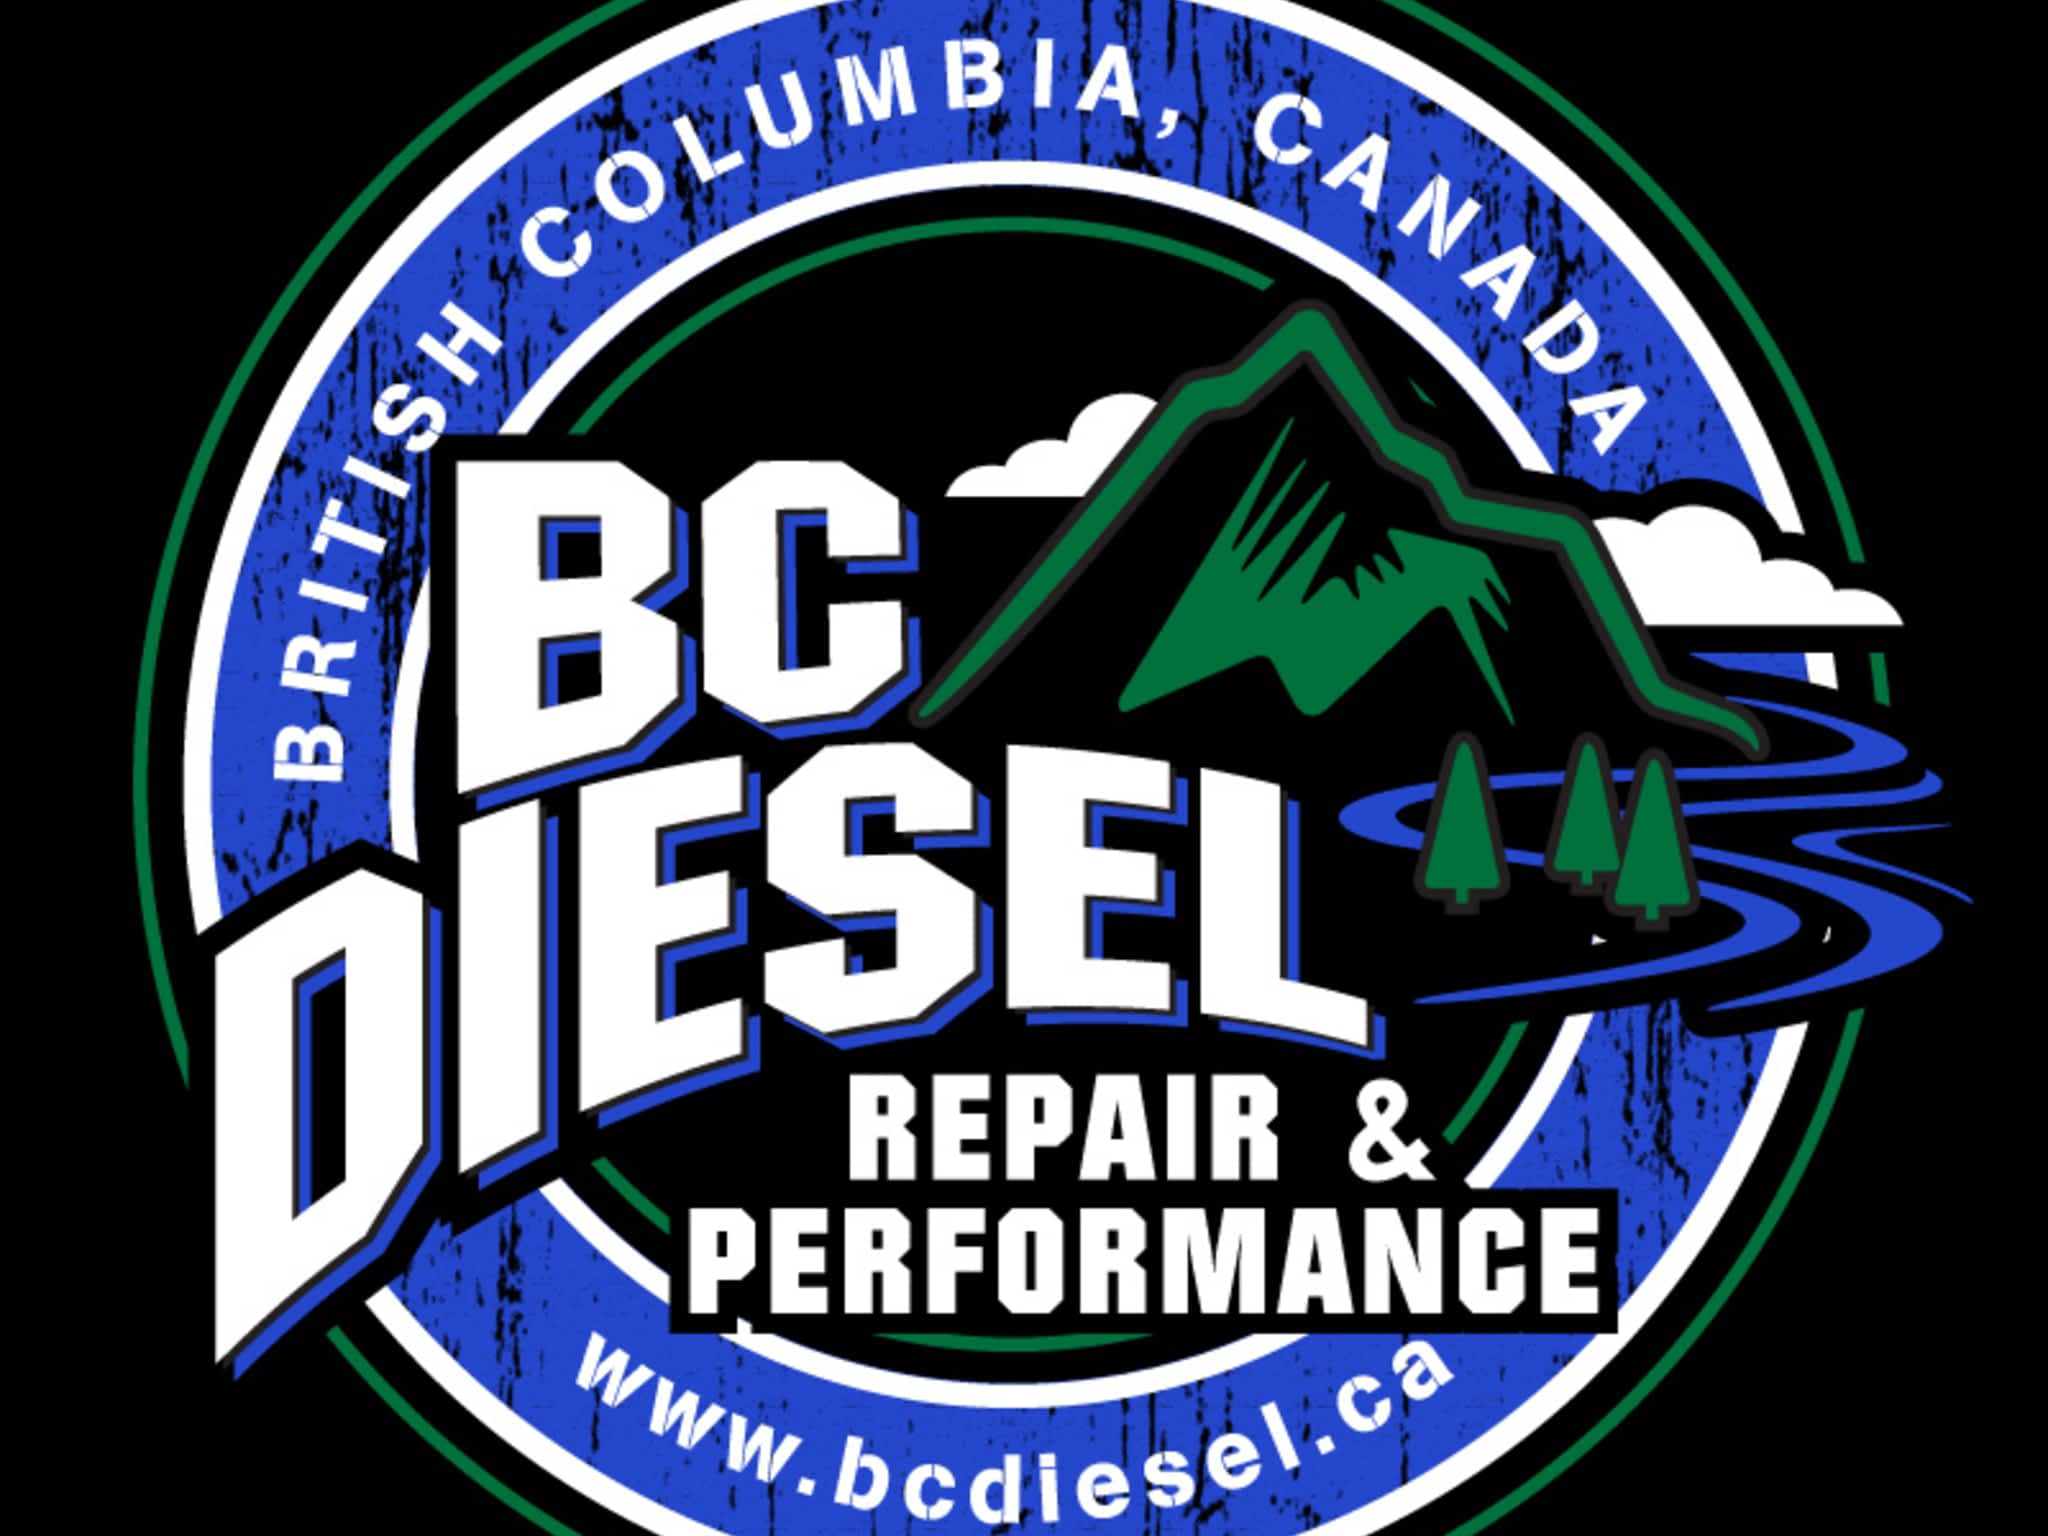 photo BC Diesel Truck Repair & Performance